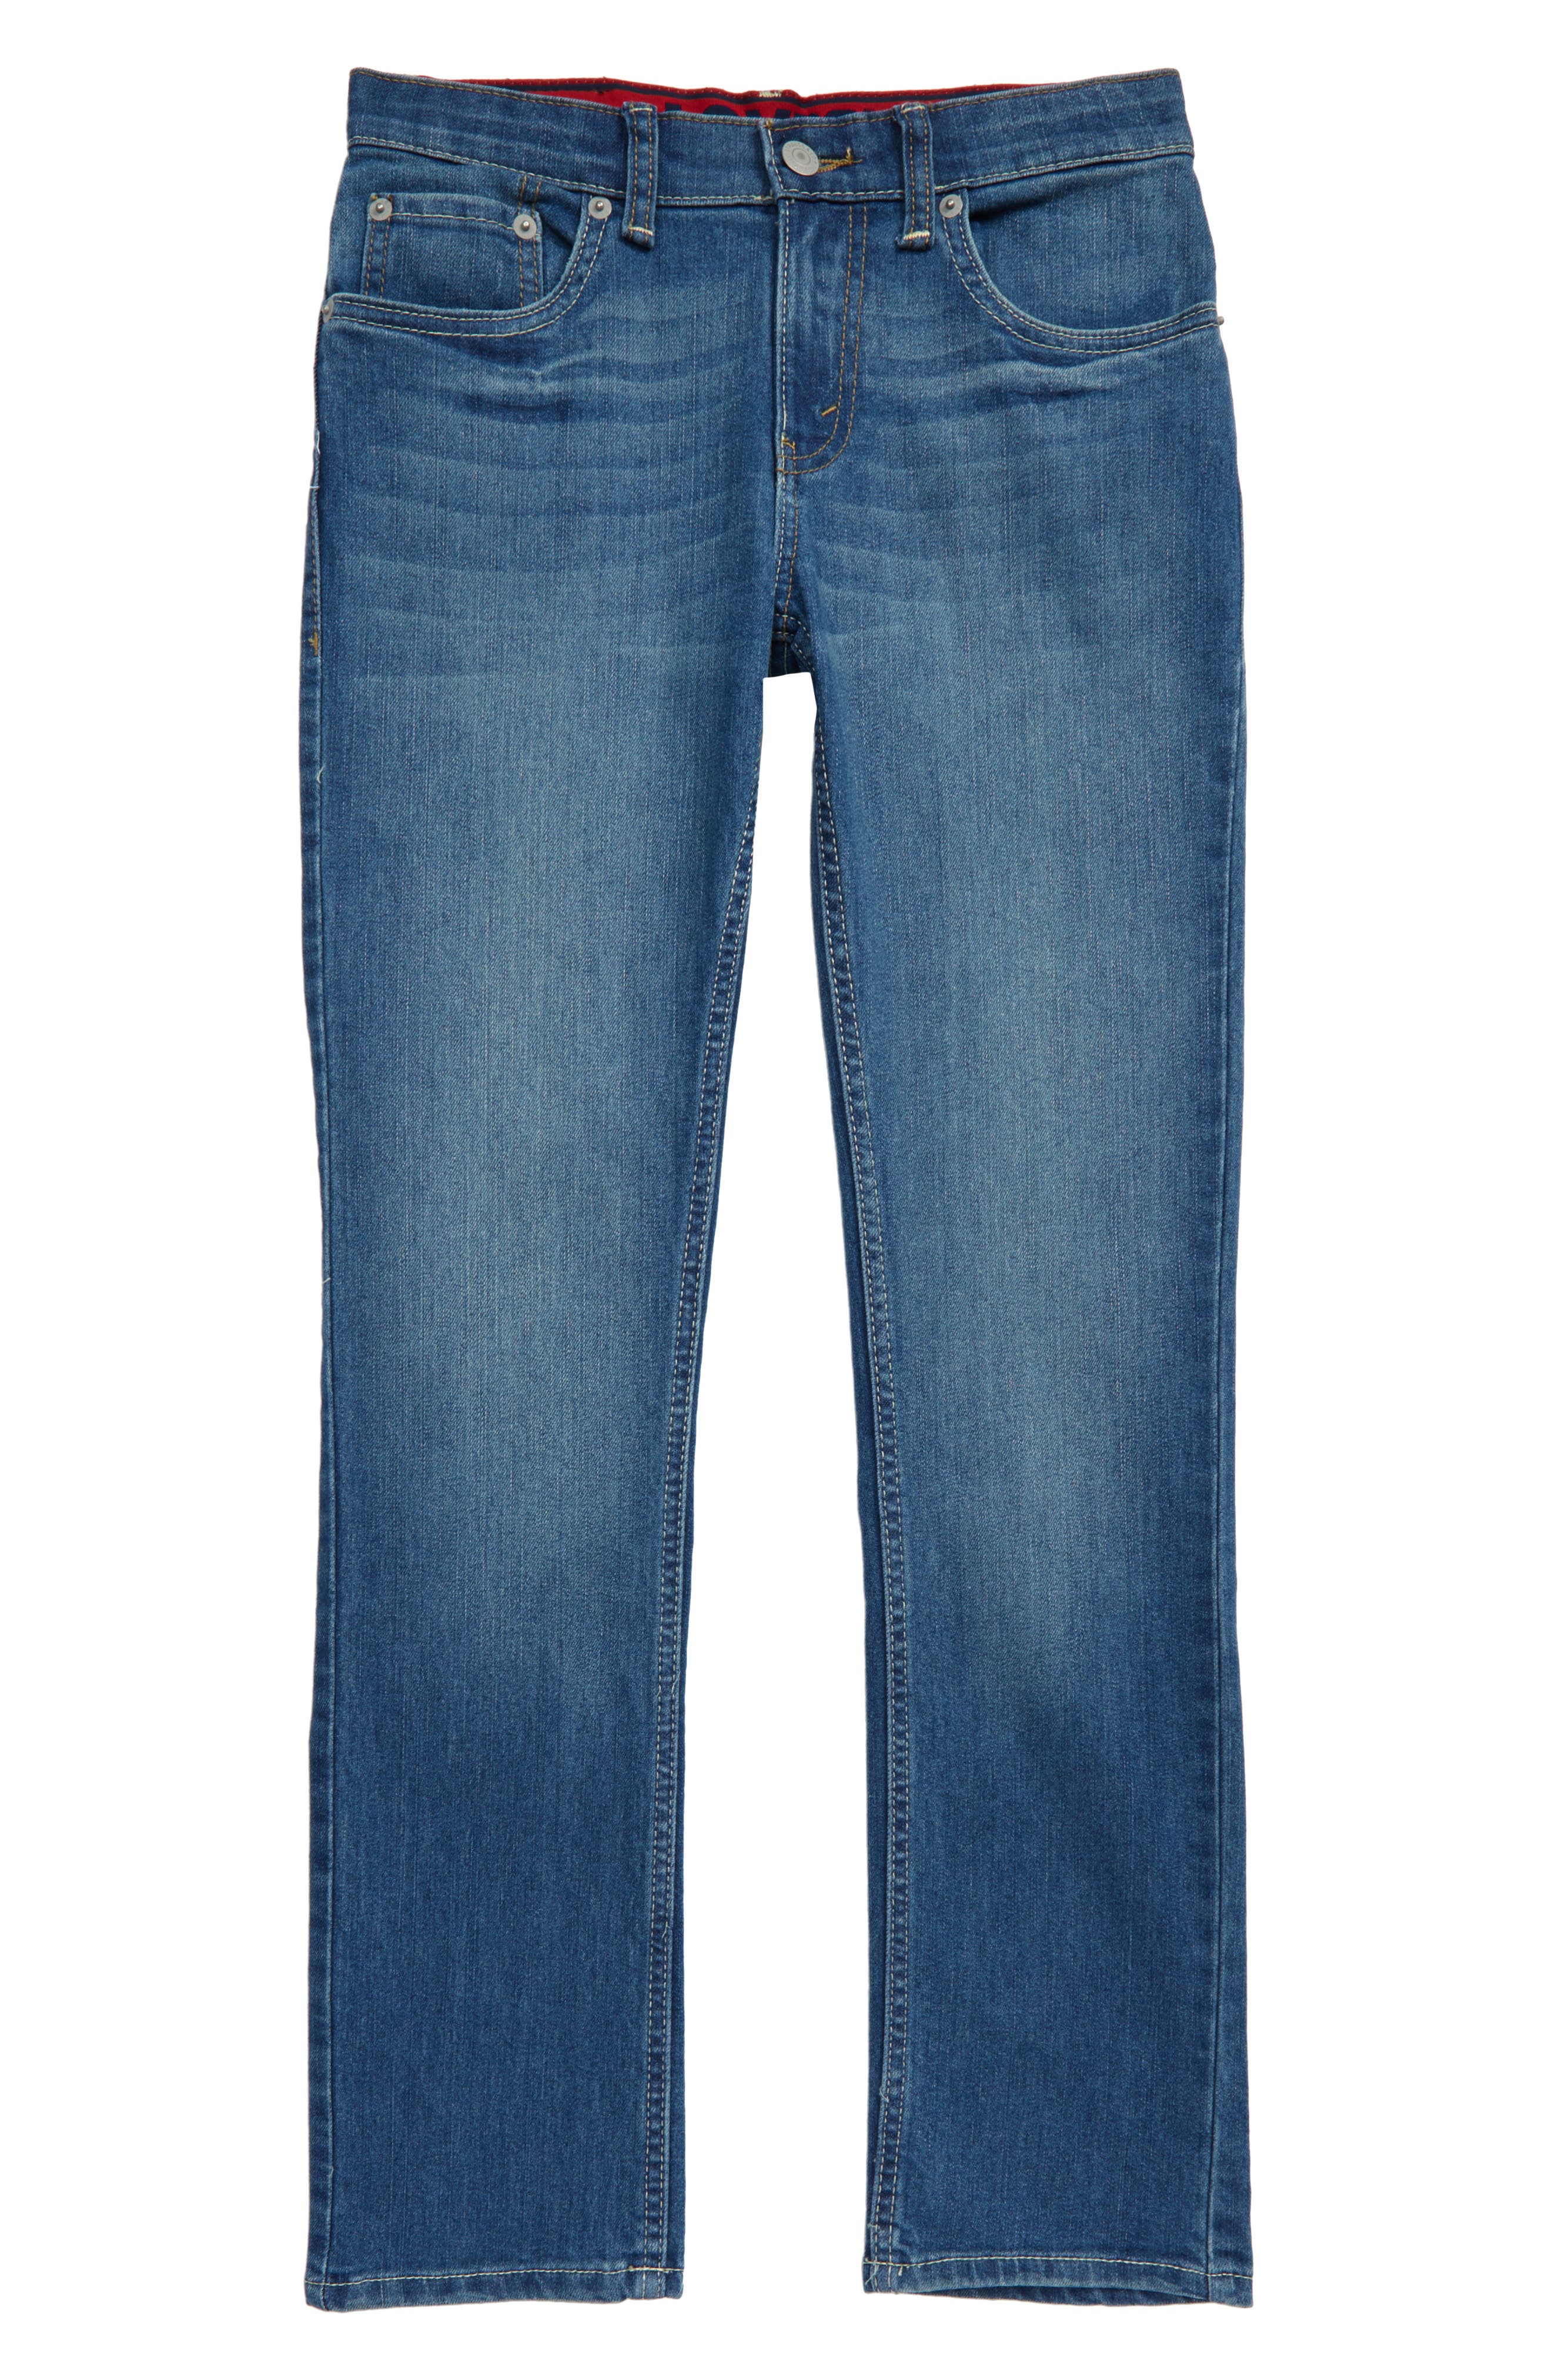 nordstrom levis jeans